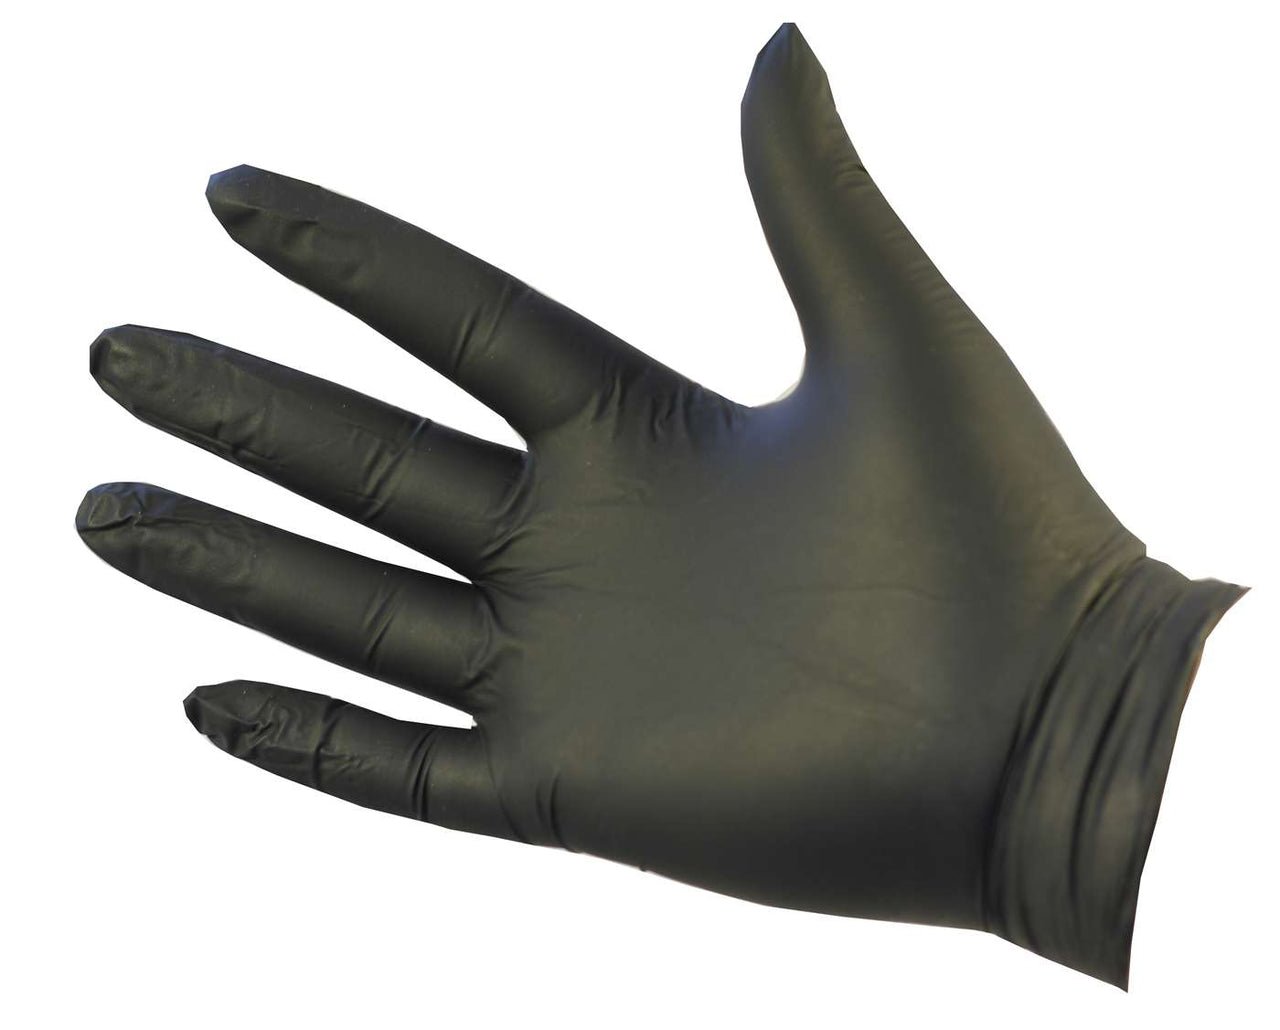 Ultraflex Black Nitrile Powder Free Gloves size L (one box =100 gloves)